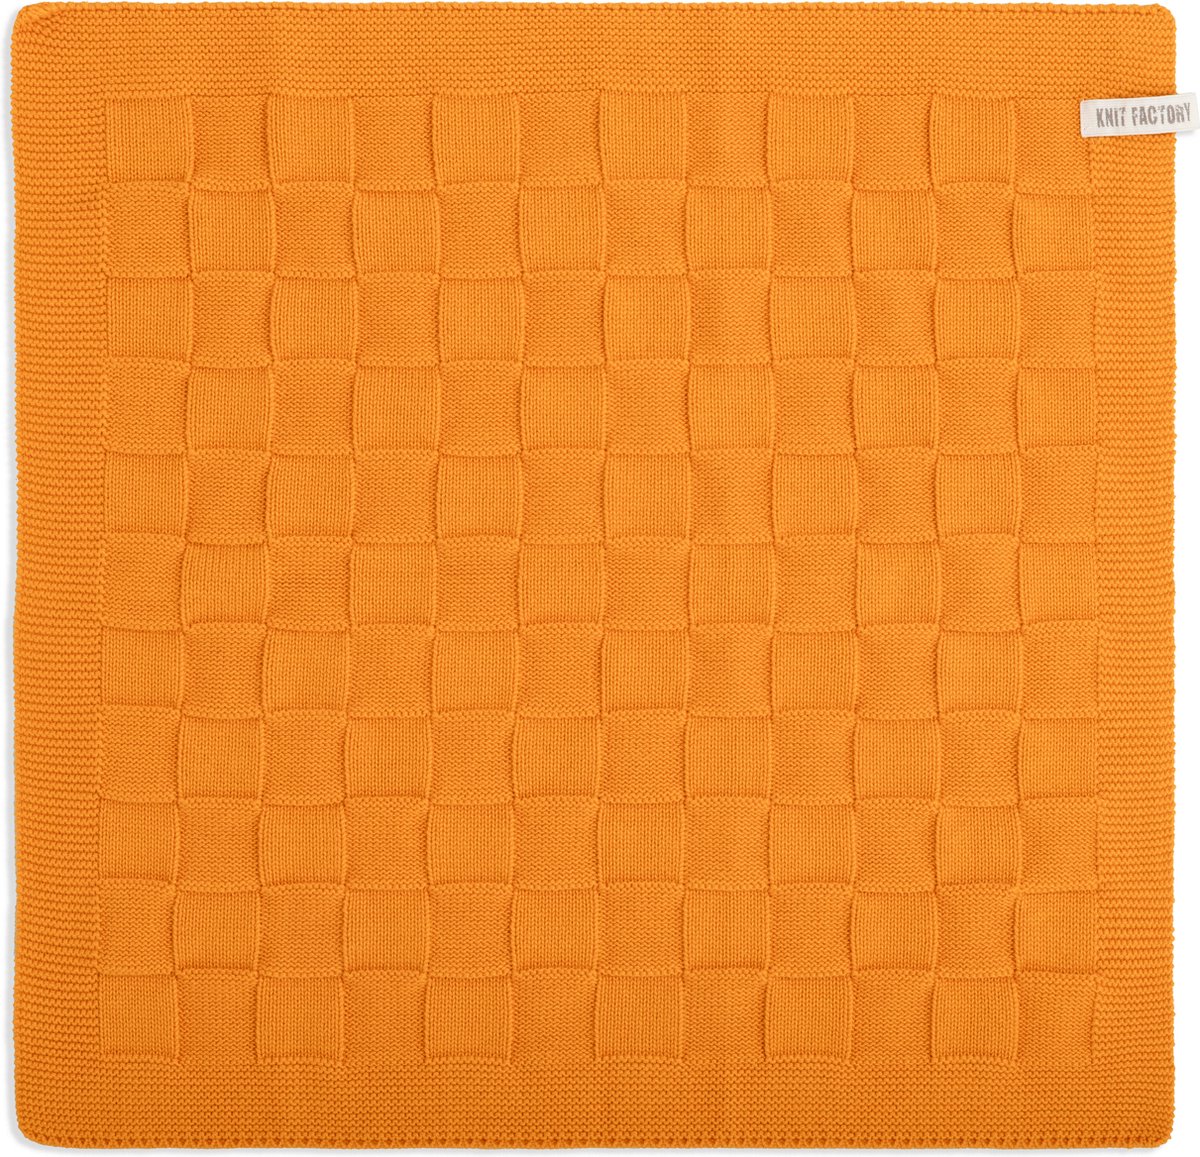 Knit Factory Gebreide Keukendoek - Keukenhanddoek Uni - Handdoek - Vaatdoek - Keuken doek - Orange - Oranje - 50x50 cm